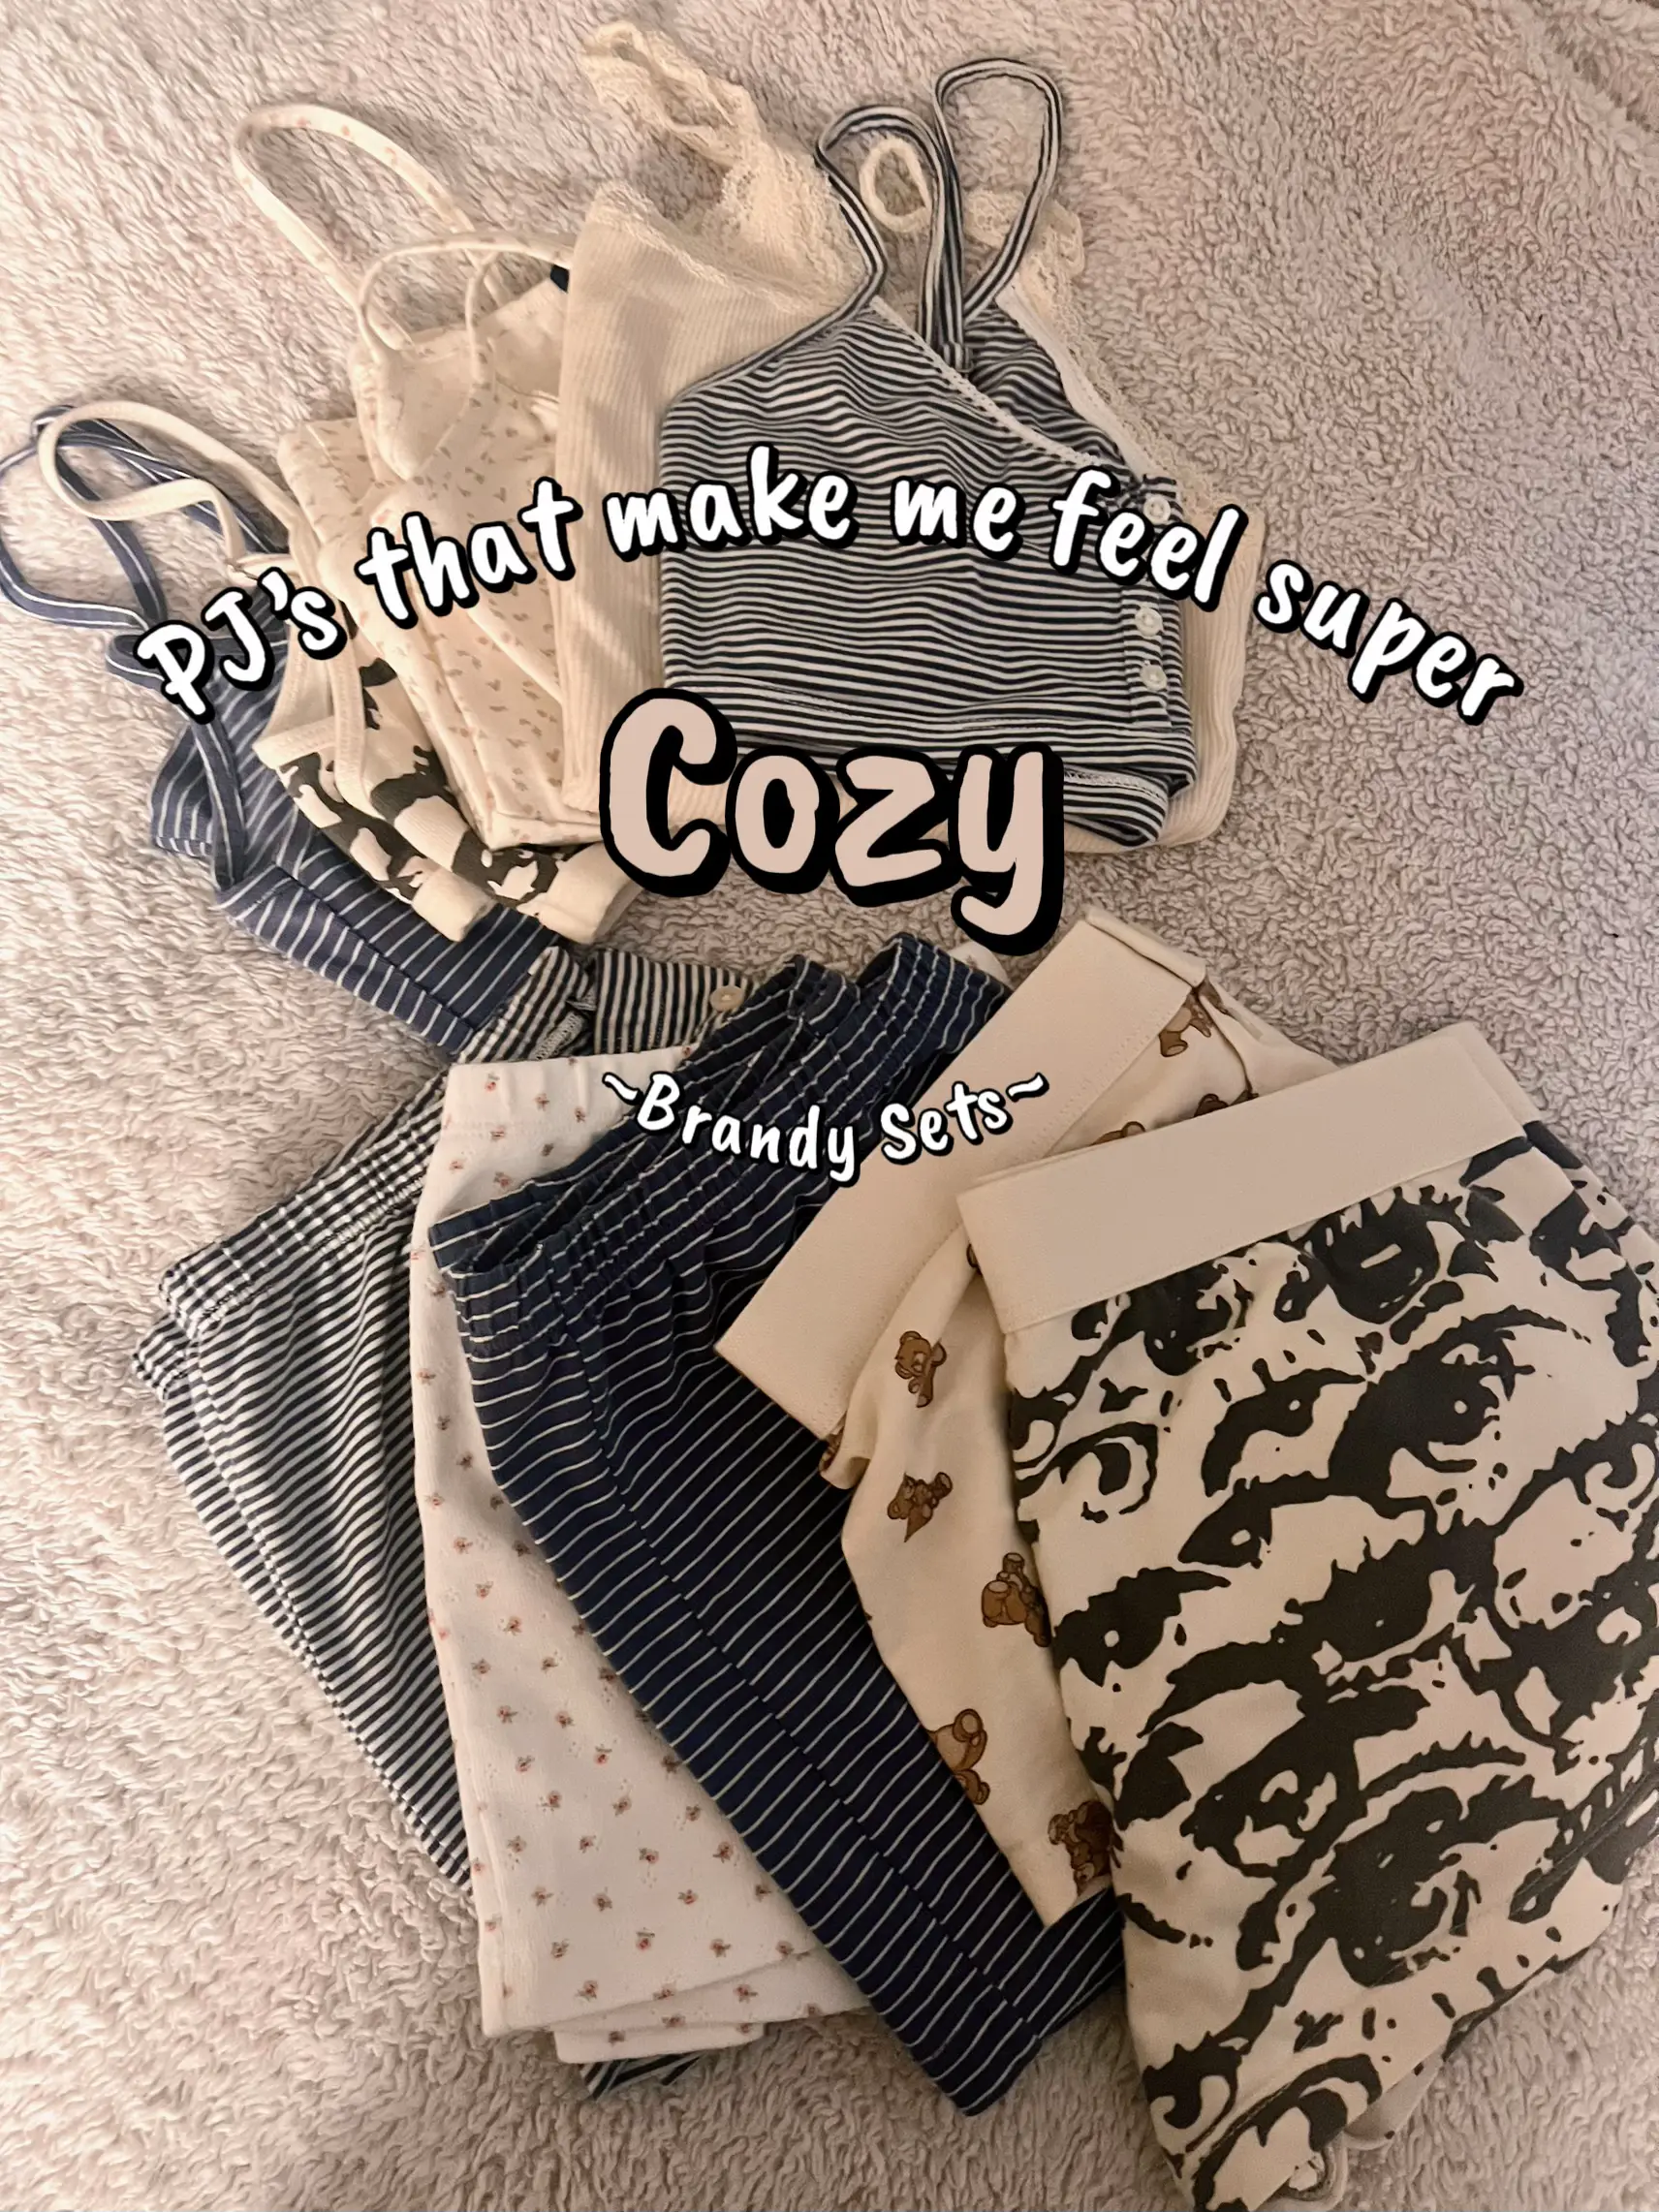 Colsie brand medium cozy heart pajama set